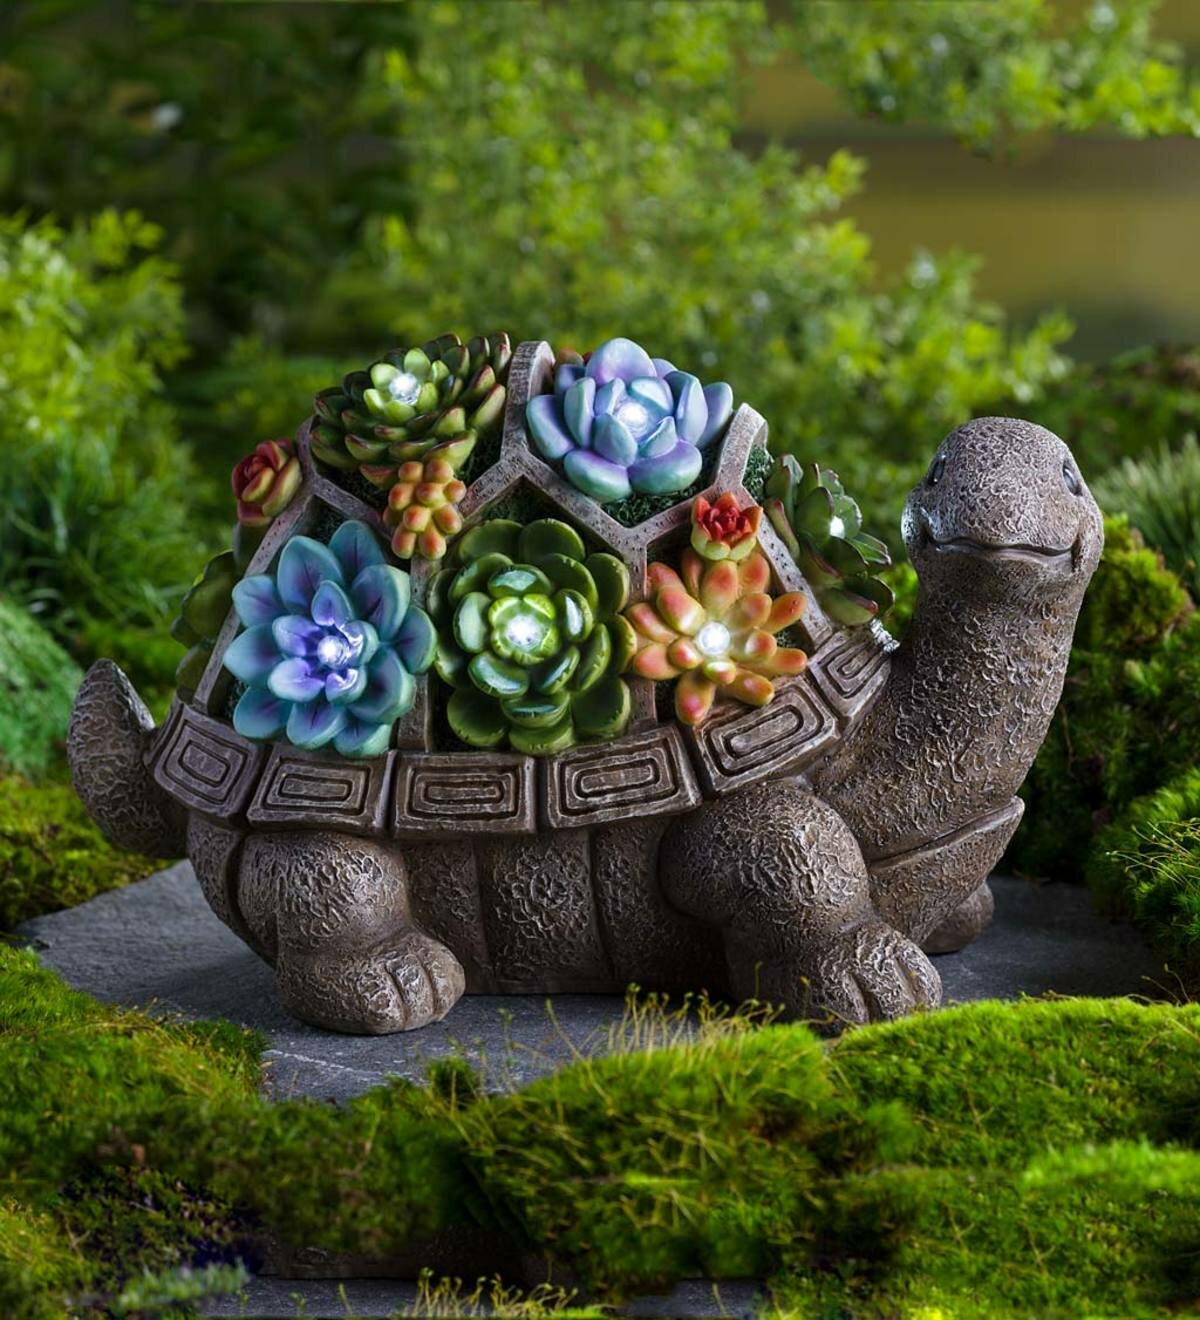 Turtle Garden Swinging Animal Sculpture Ornament